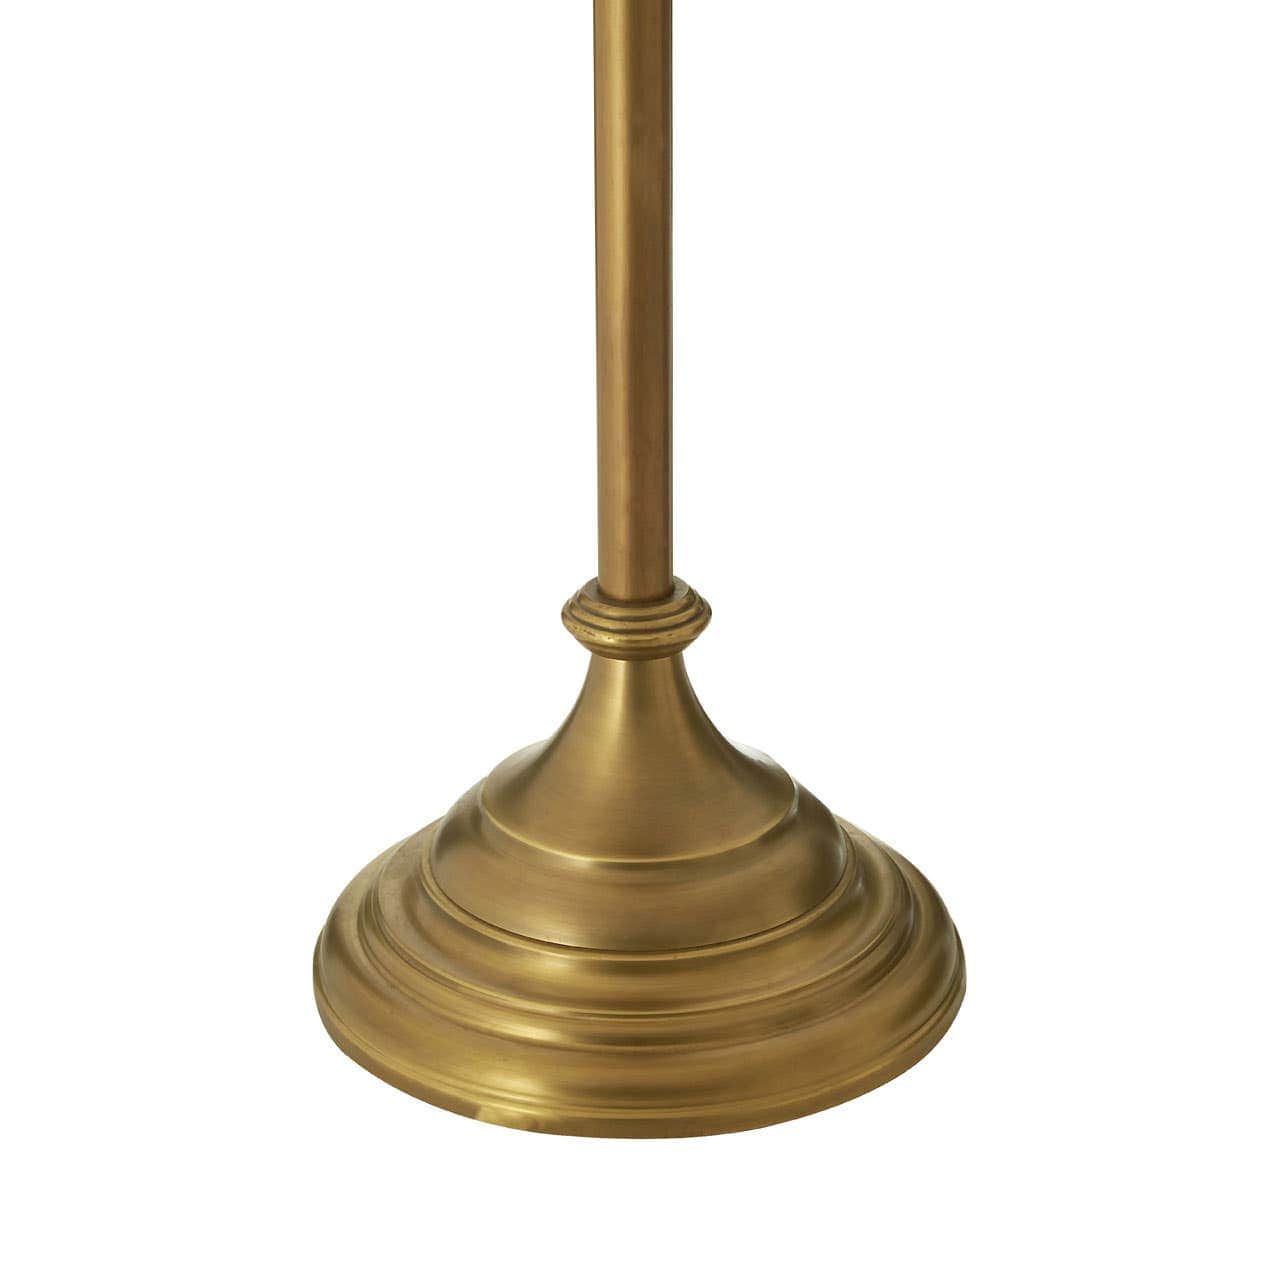 Noosa & Co. Lighting Hampstead Brass Finish Table Lamp House of Isabella UK